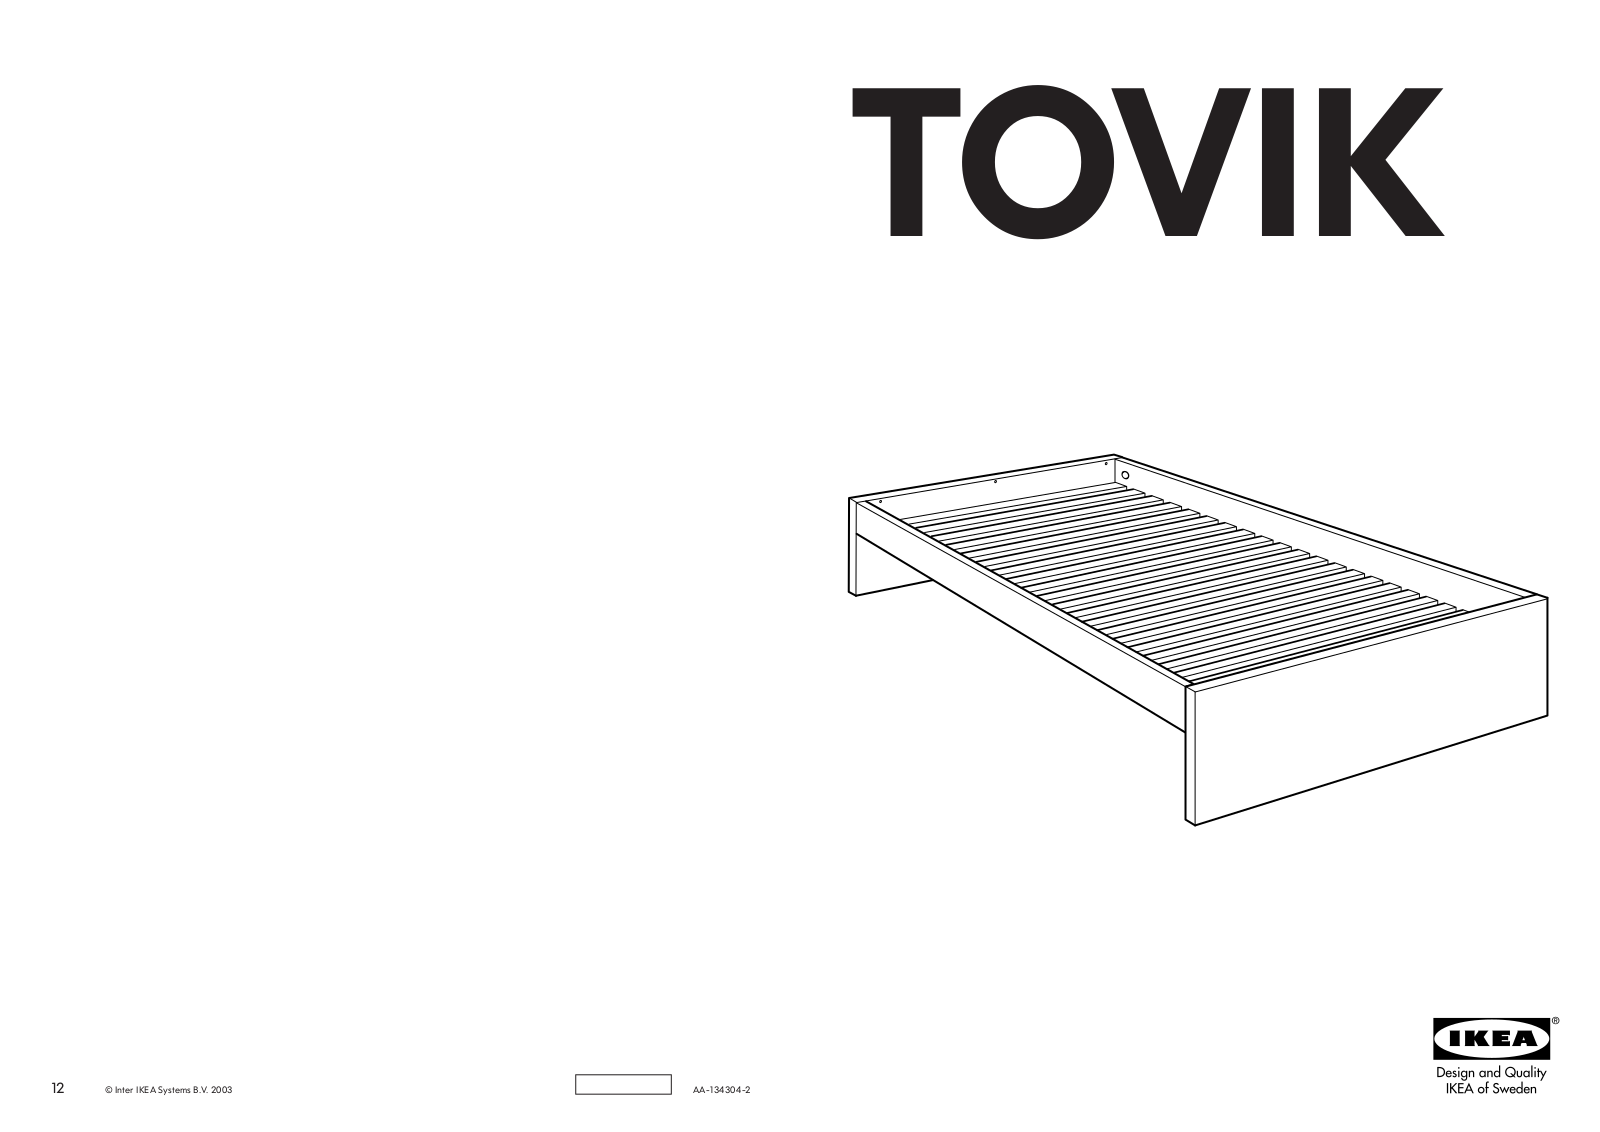 IKEA TOVIK BED FRAME TWIN User Manual